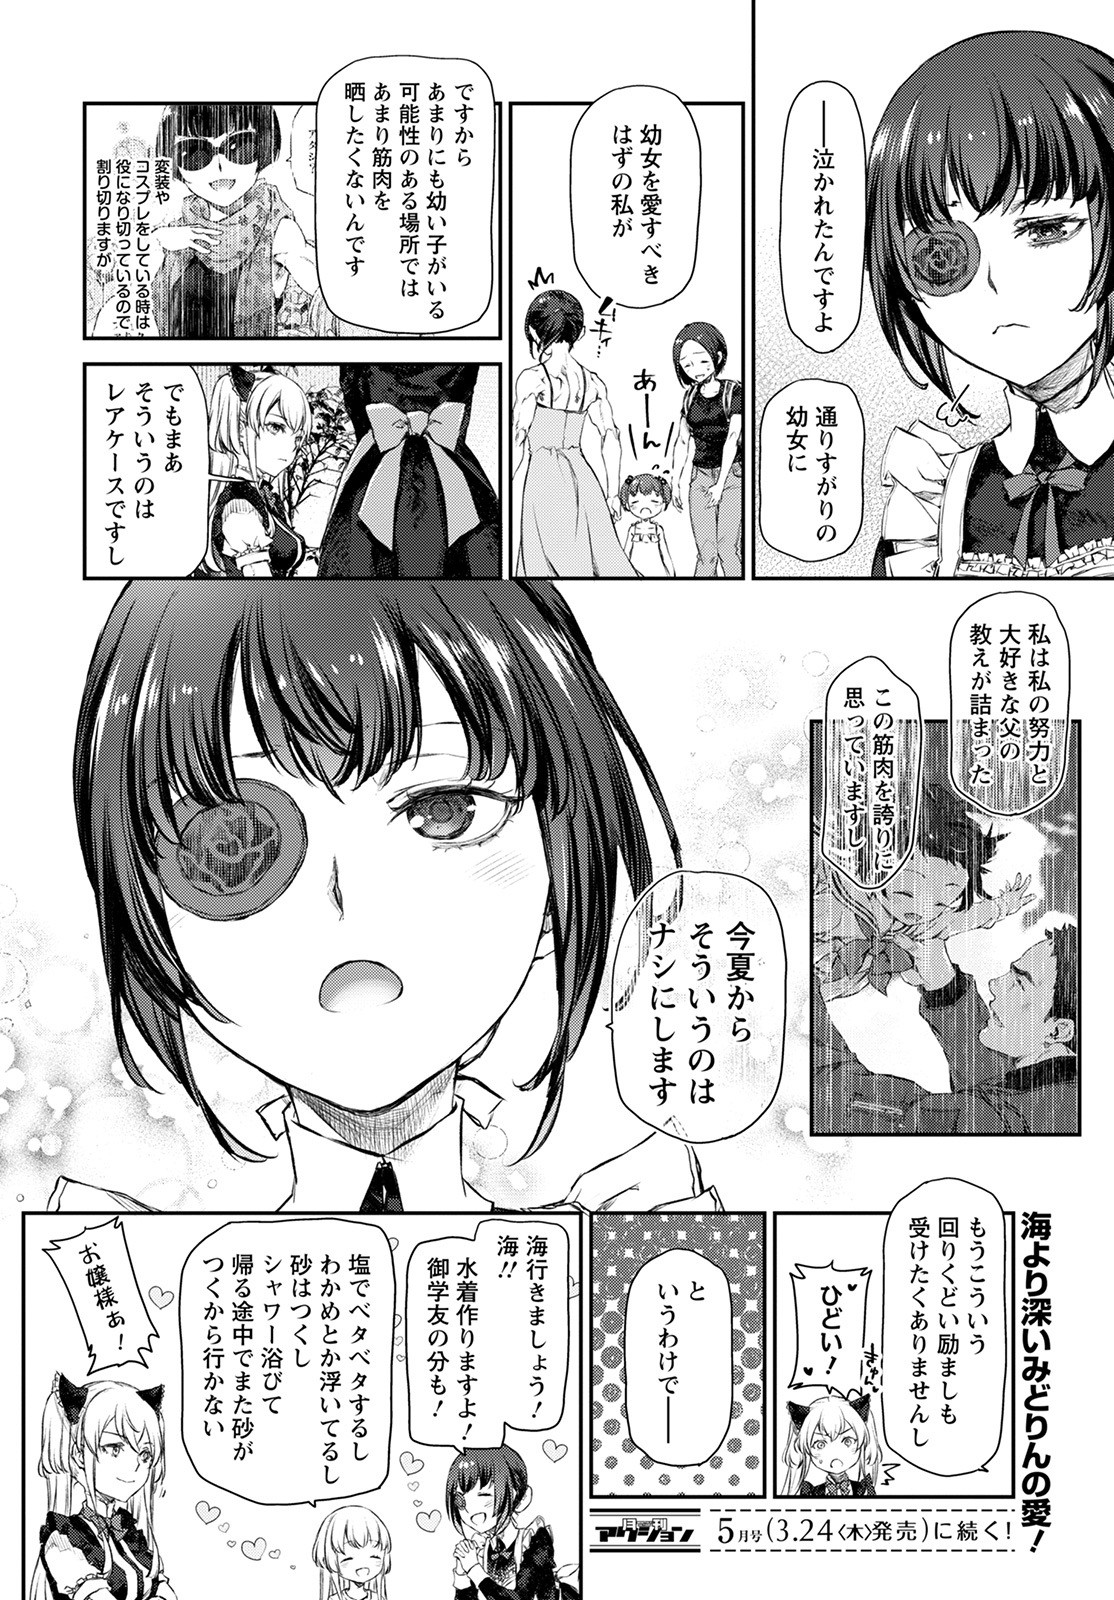 Uchi no Maid ga Uzasugiru! - Chapter 51 - Page 26